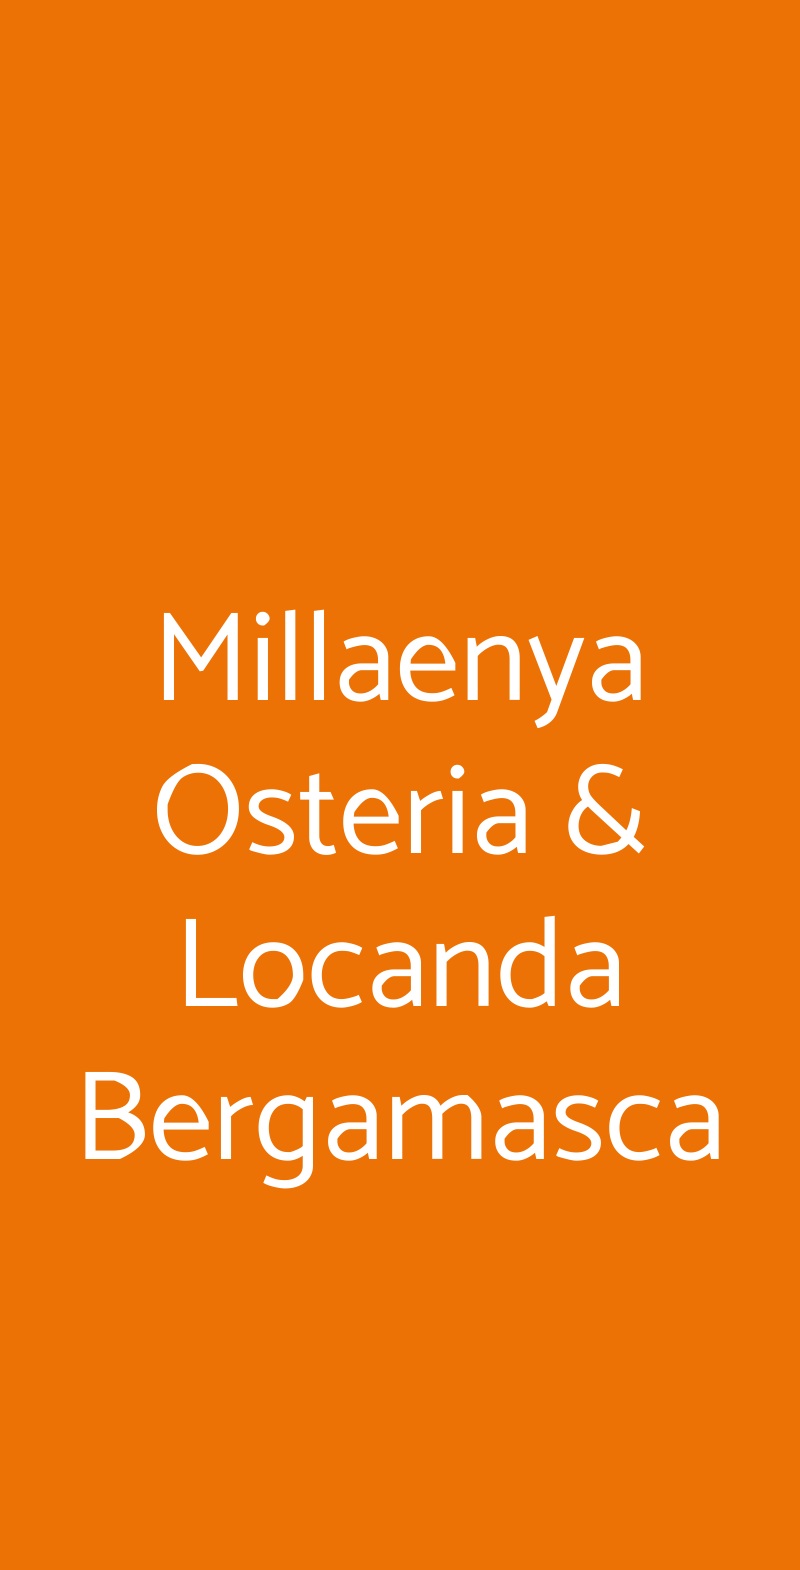 Millaenya Osteria & Locanda Bergamasca Entratico menù 1 pagina